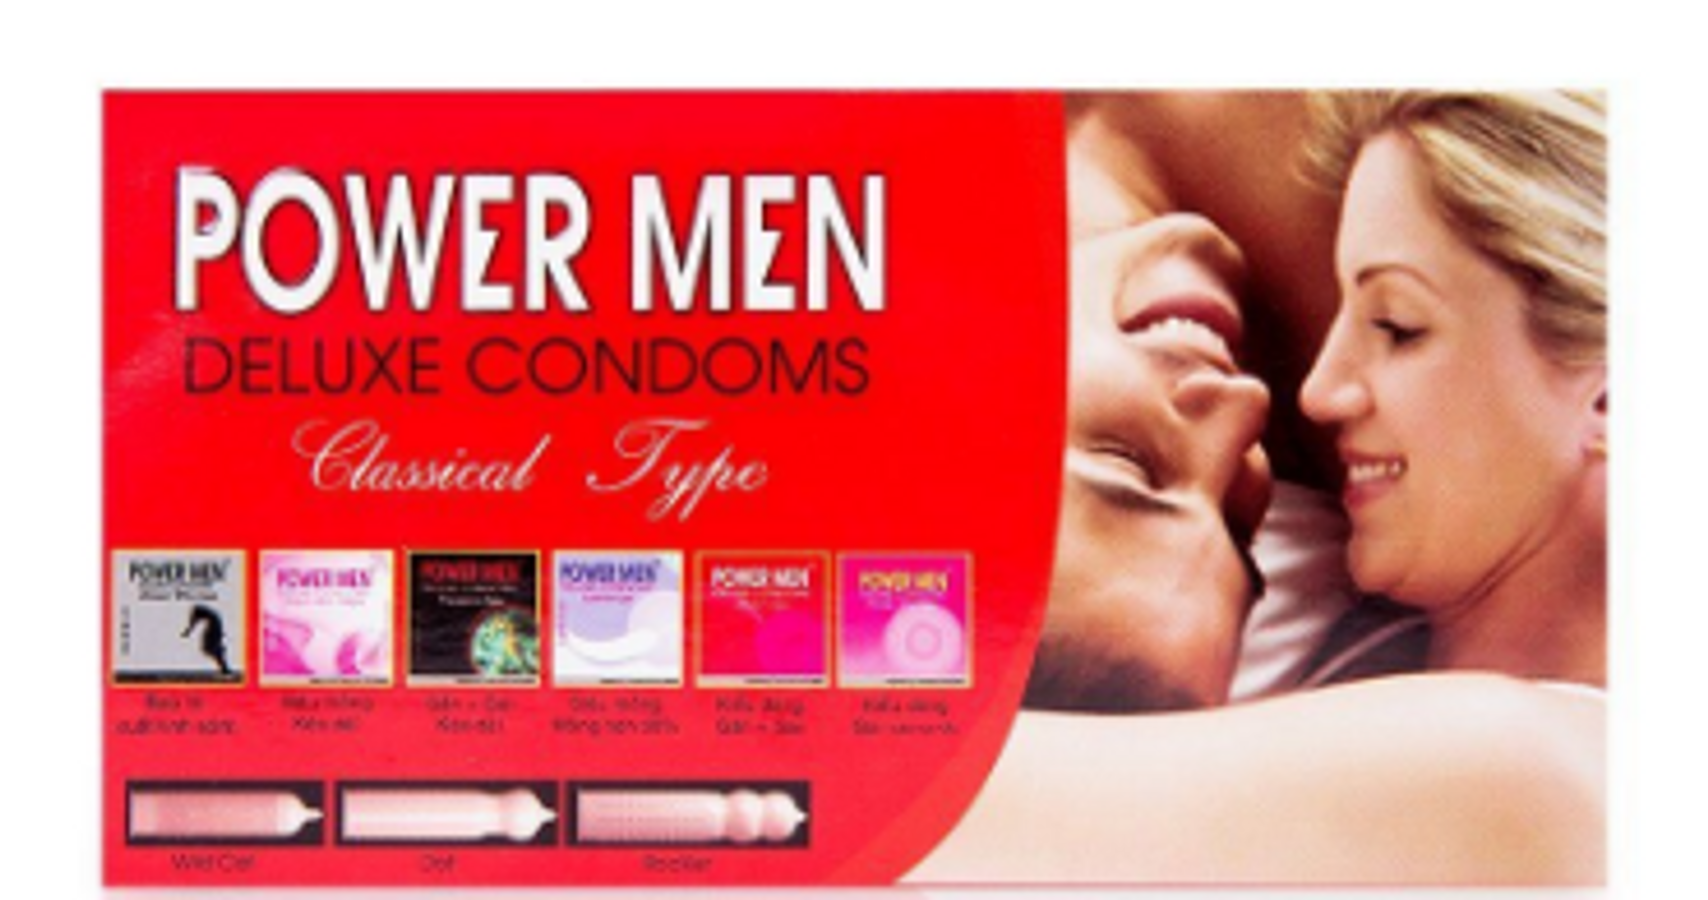 Bao cao su Power Men Deluxe Condoms Classical Type